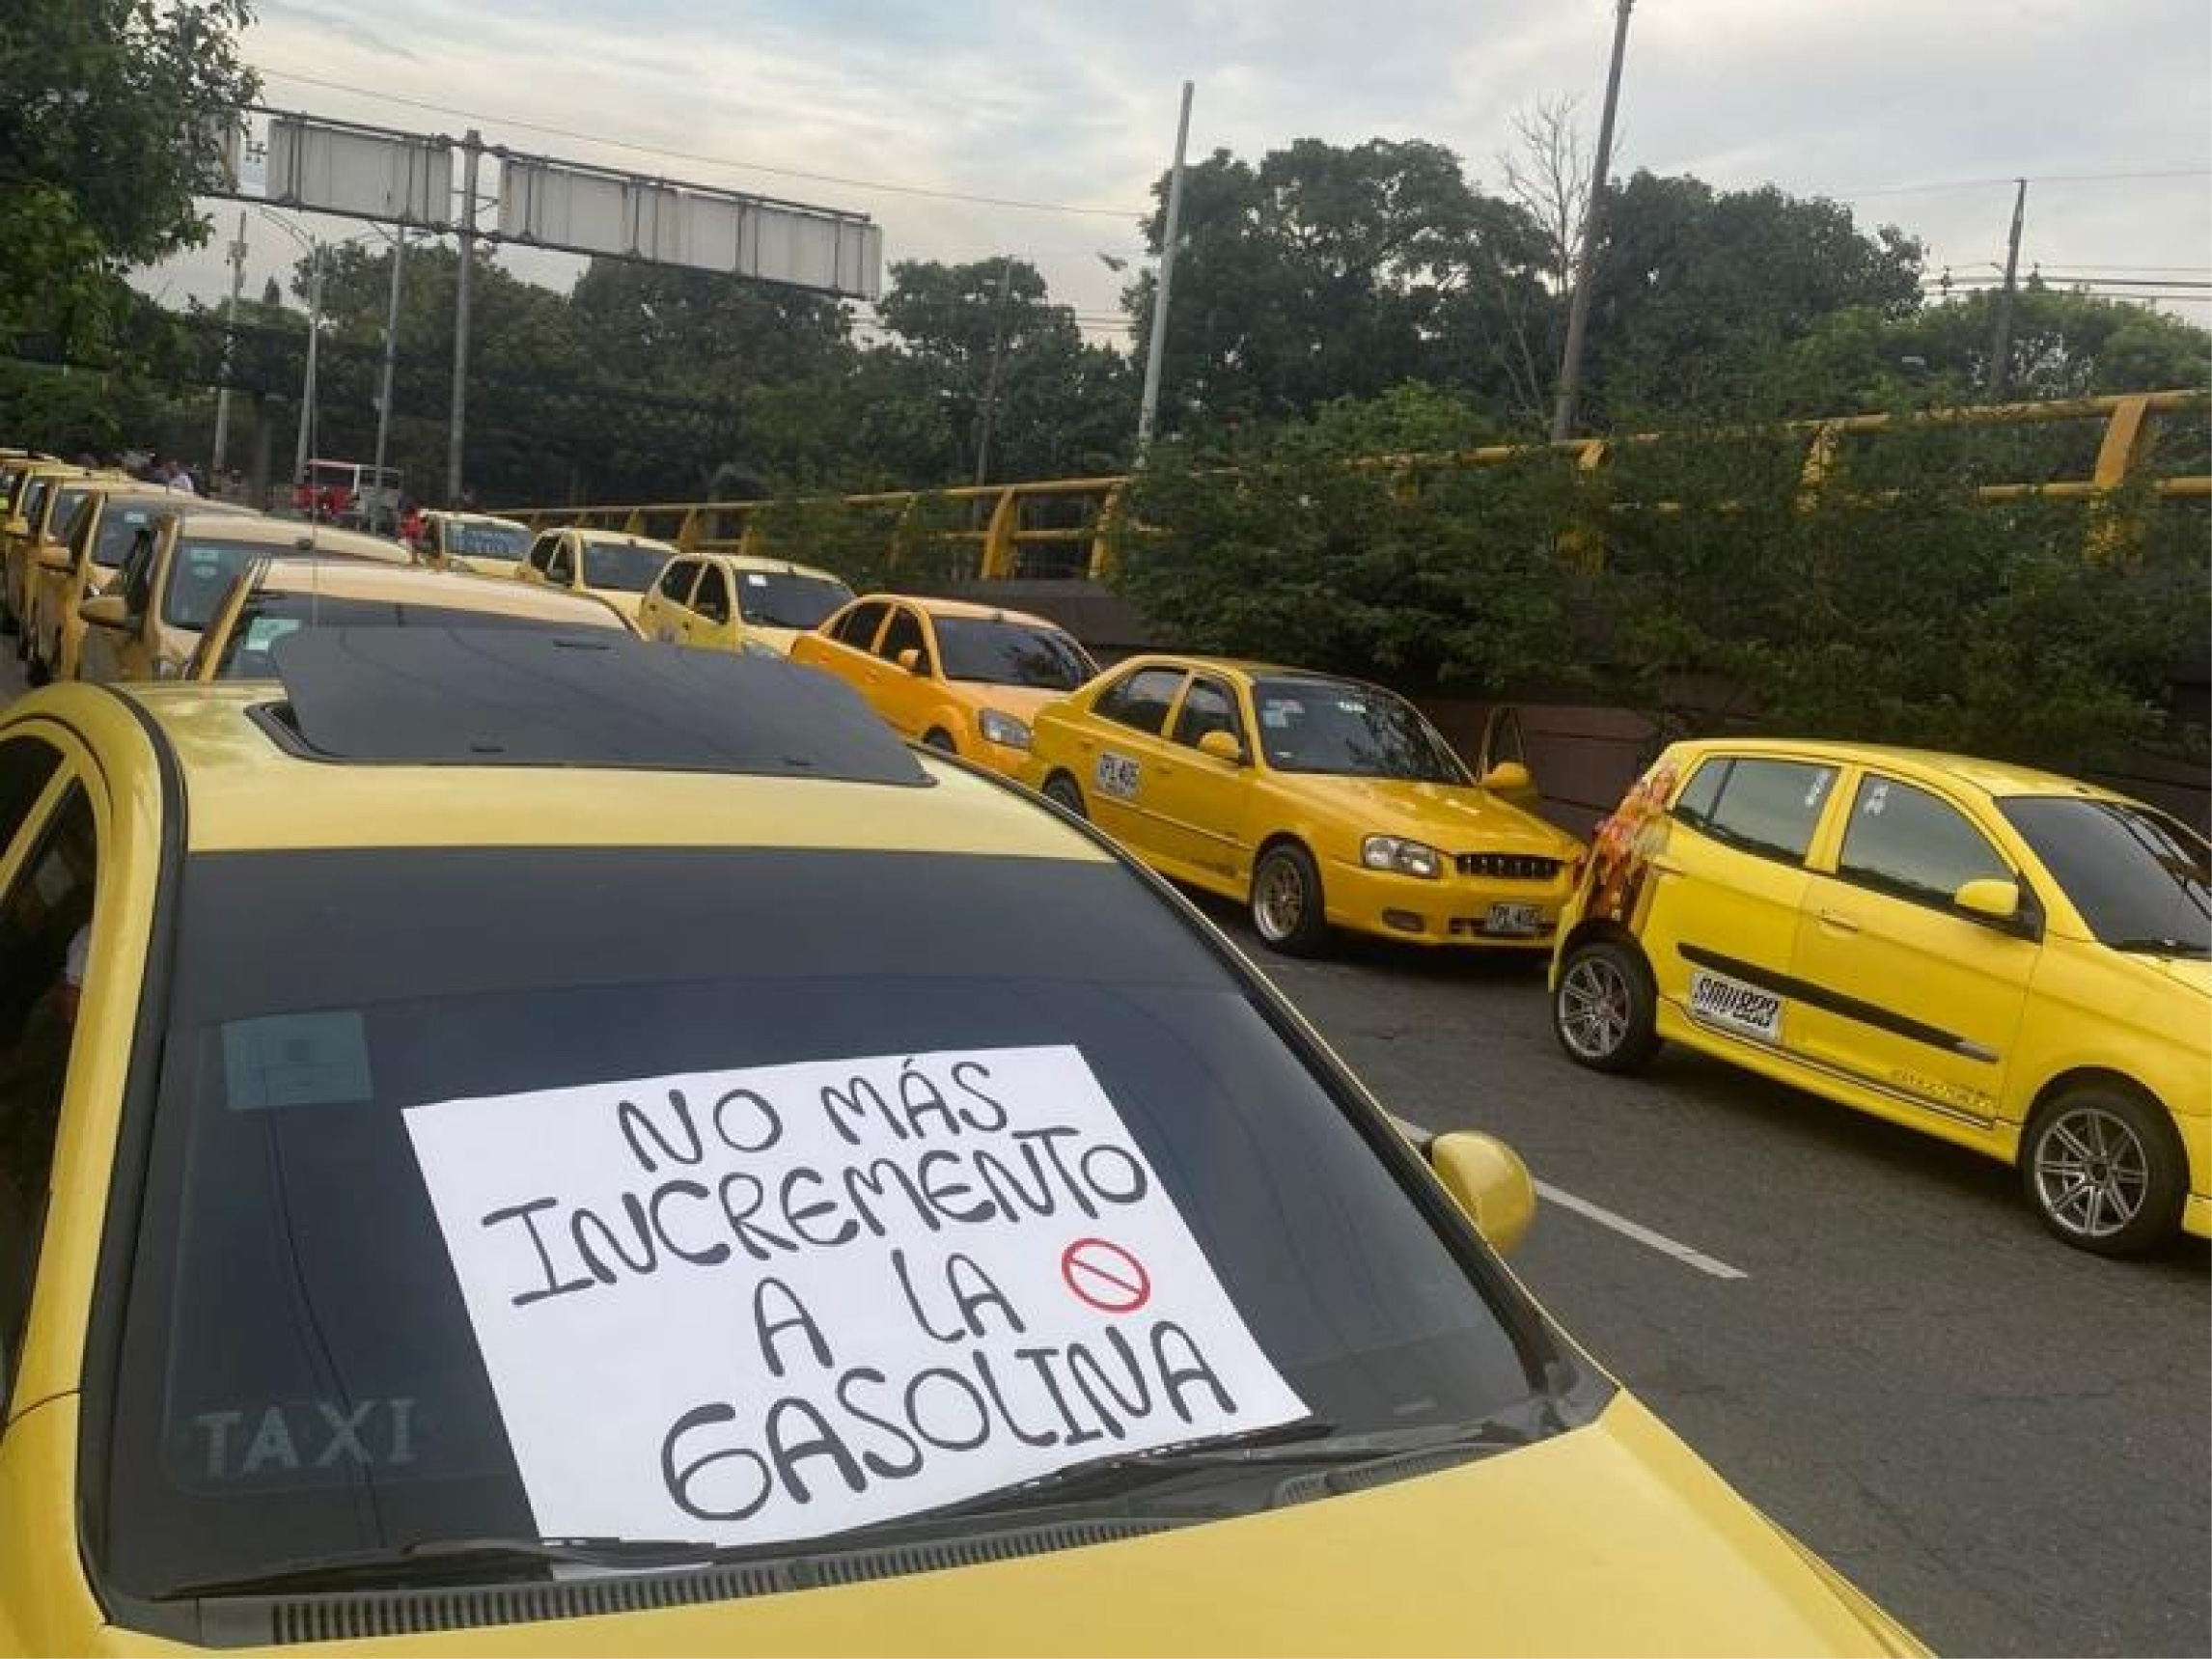 Taxistas en Antioquia consideran insuficiente el subsidio de gasolina: “nos siguen carameleando”